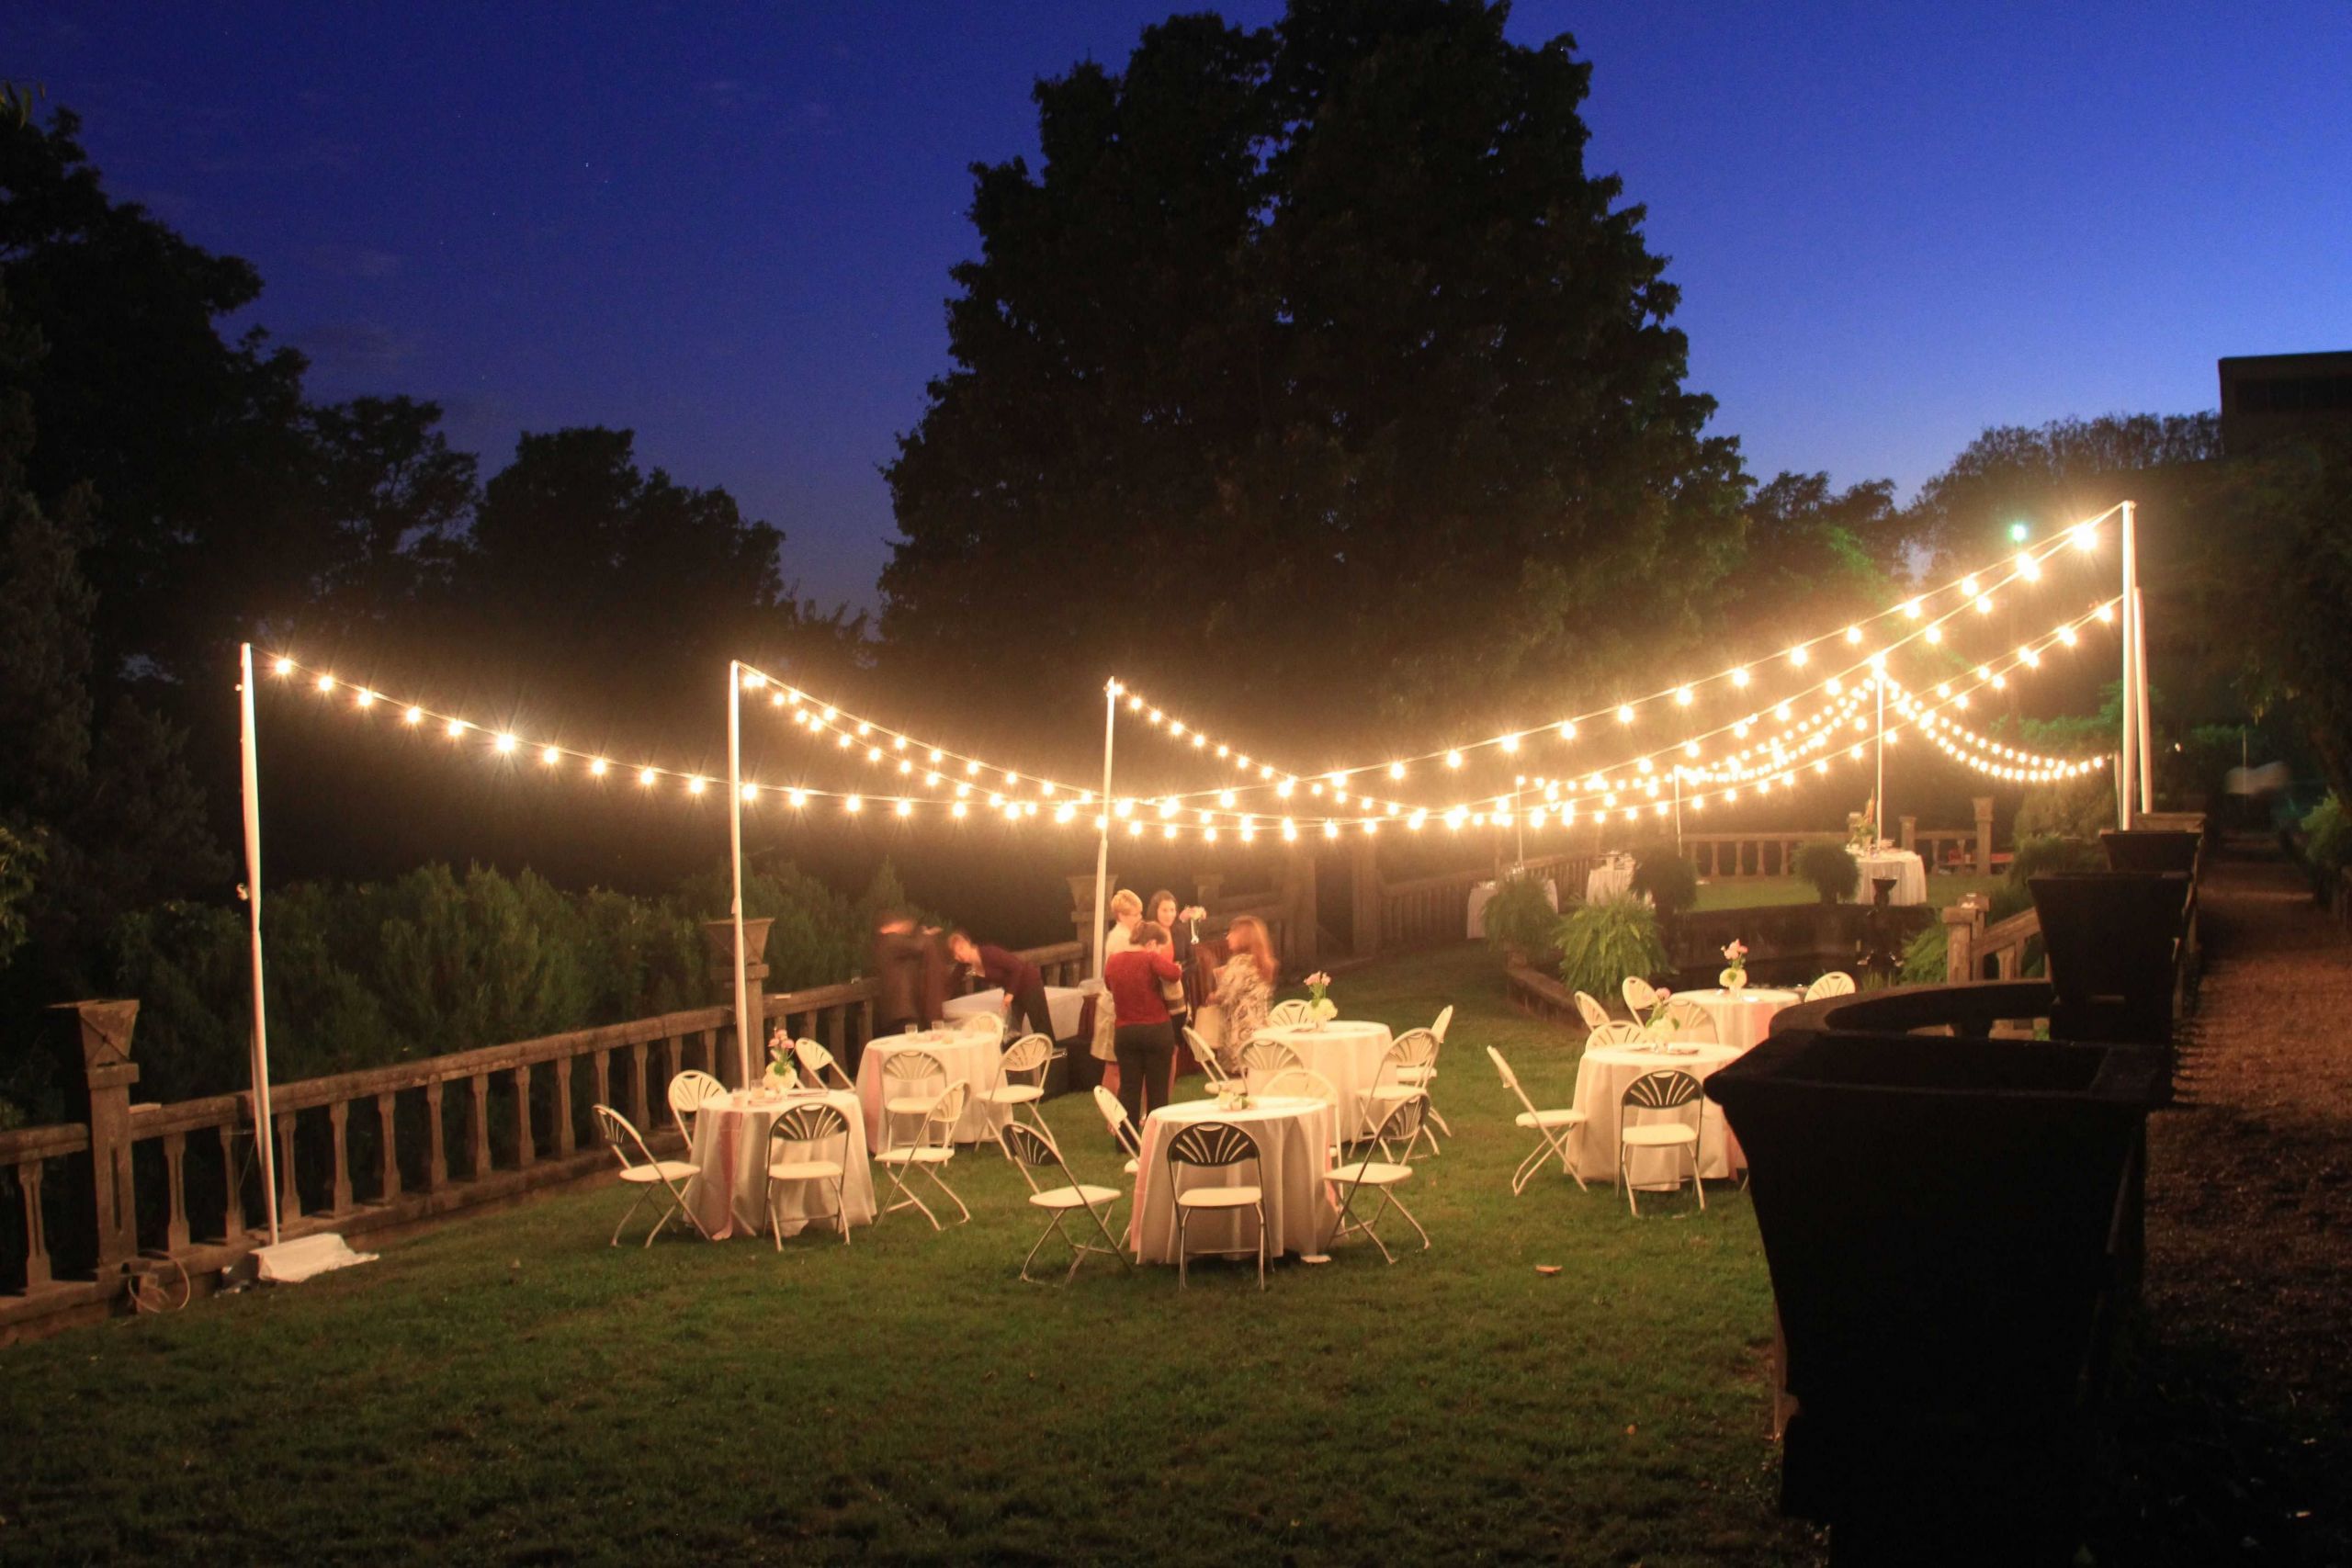 Backyard Party Lighting Ideas
 15 Wonderful DIY Backyard Lighting Ideas For Small Party